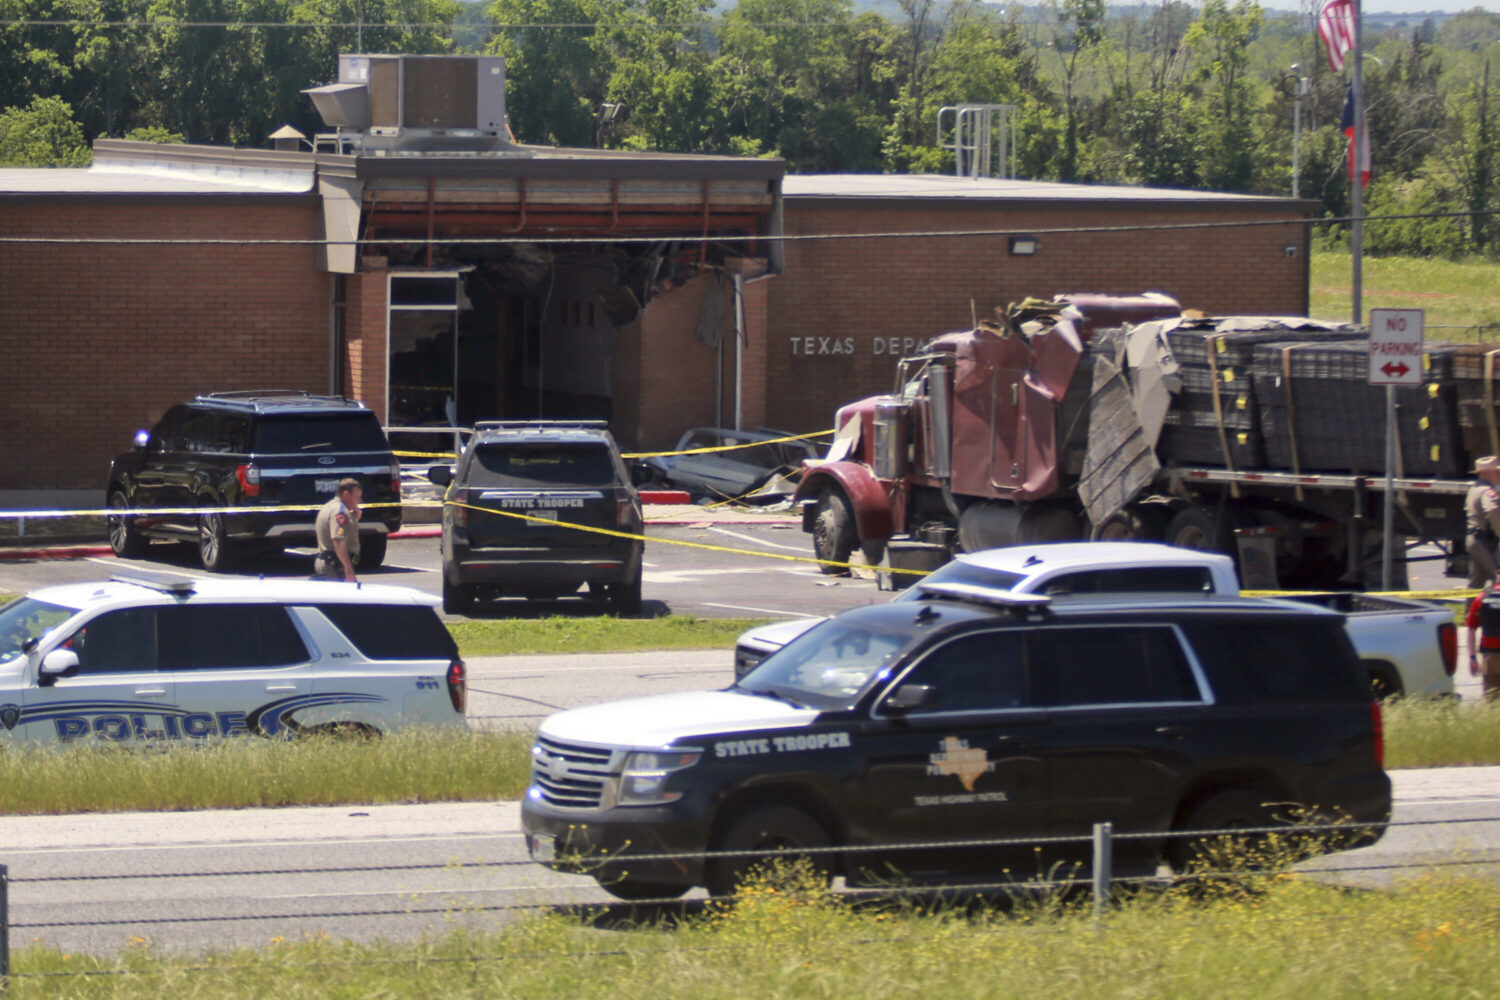 Stolen 18-wheeler crashes into Texas DPS office, killing one and injuring more than a dozen